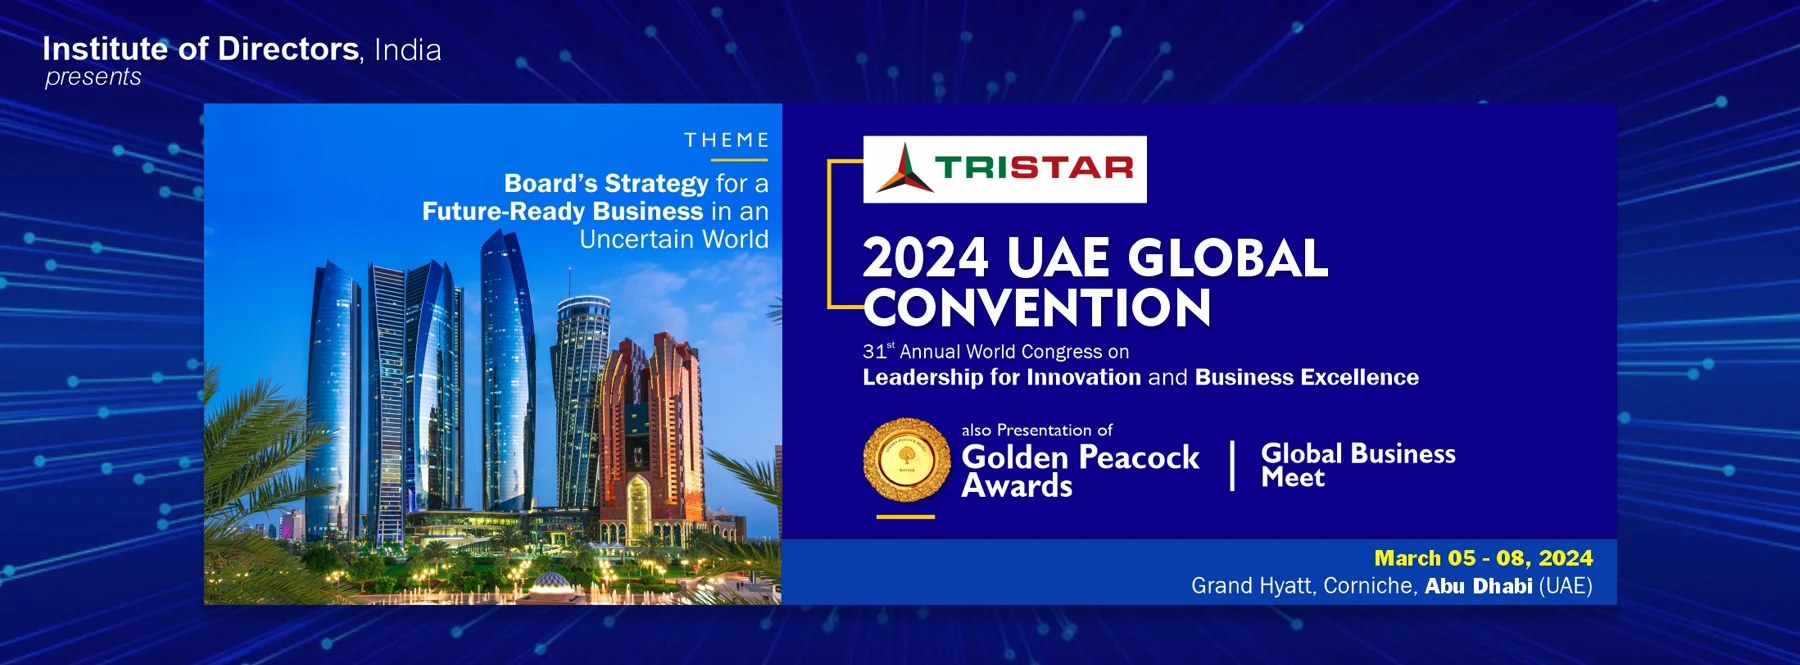 UAE Global Convention 2024